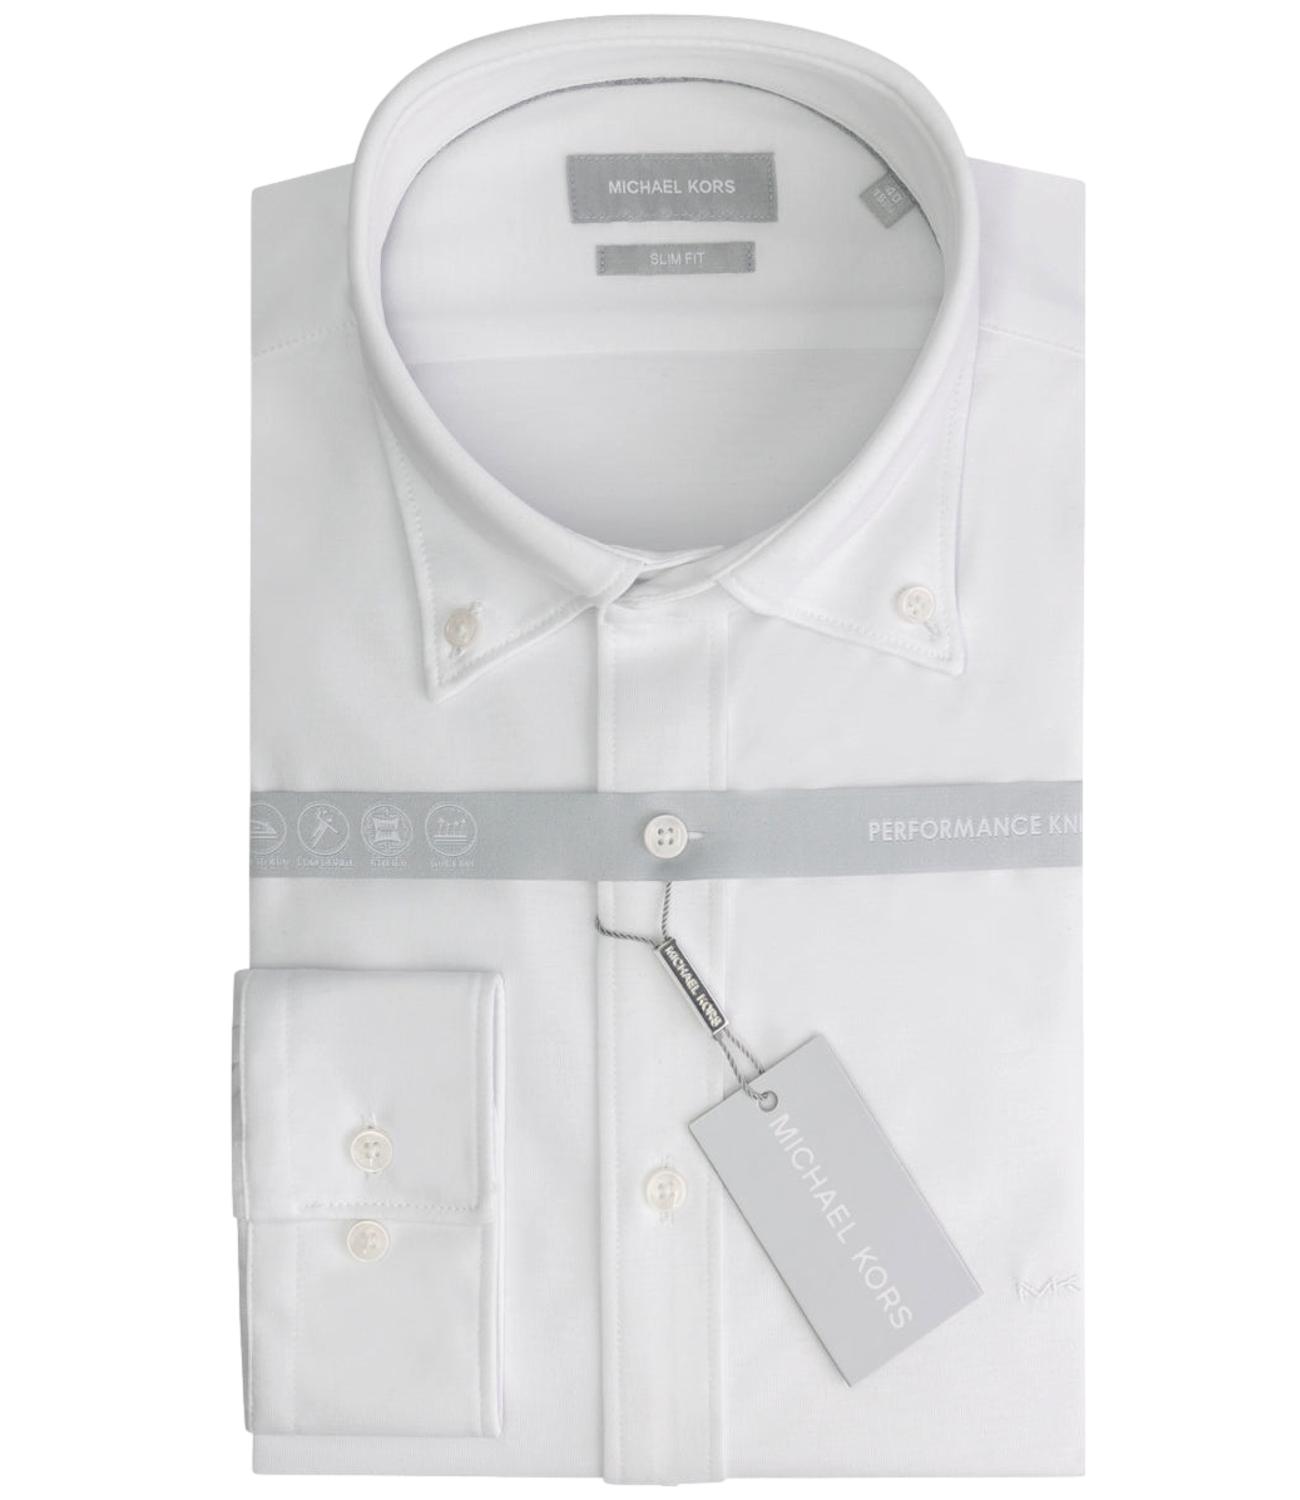 MICHEAL KORS White Men's Slim Fit Shirt